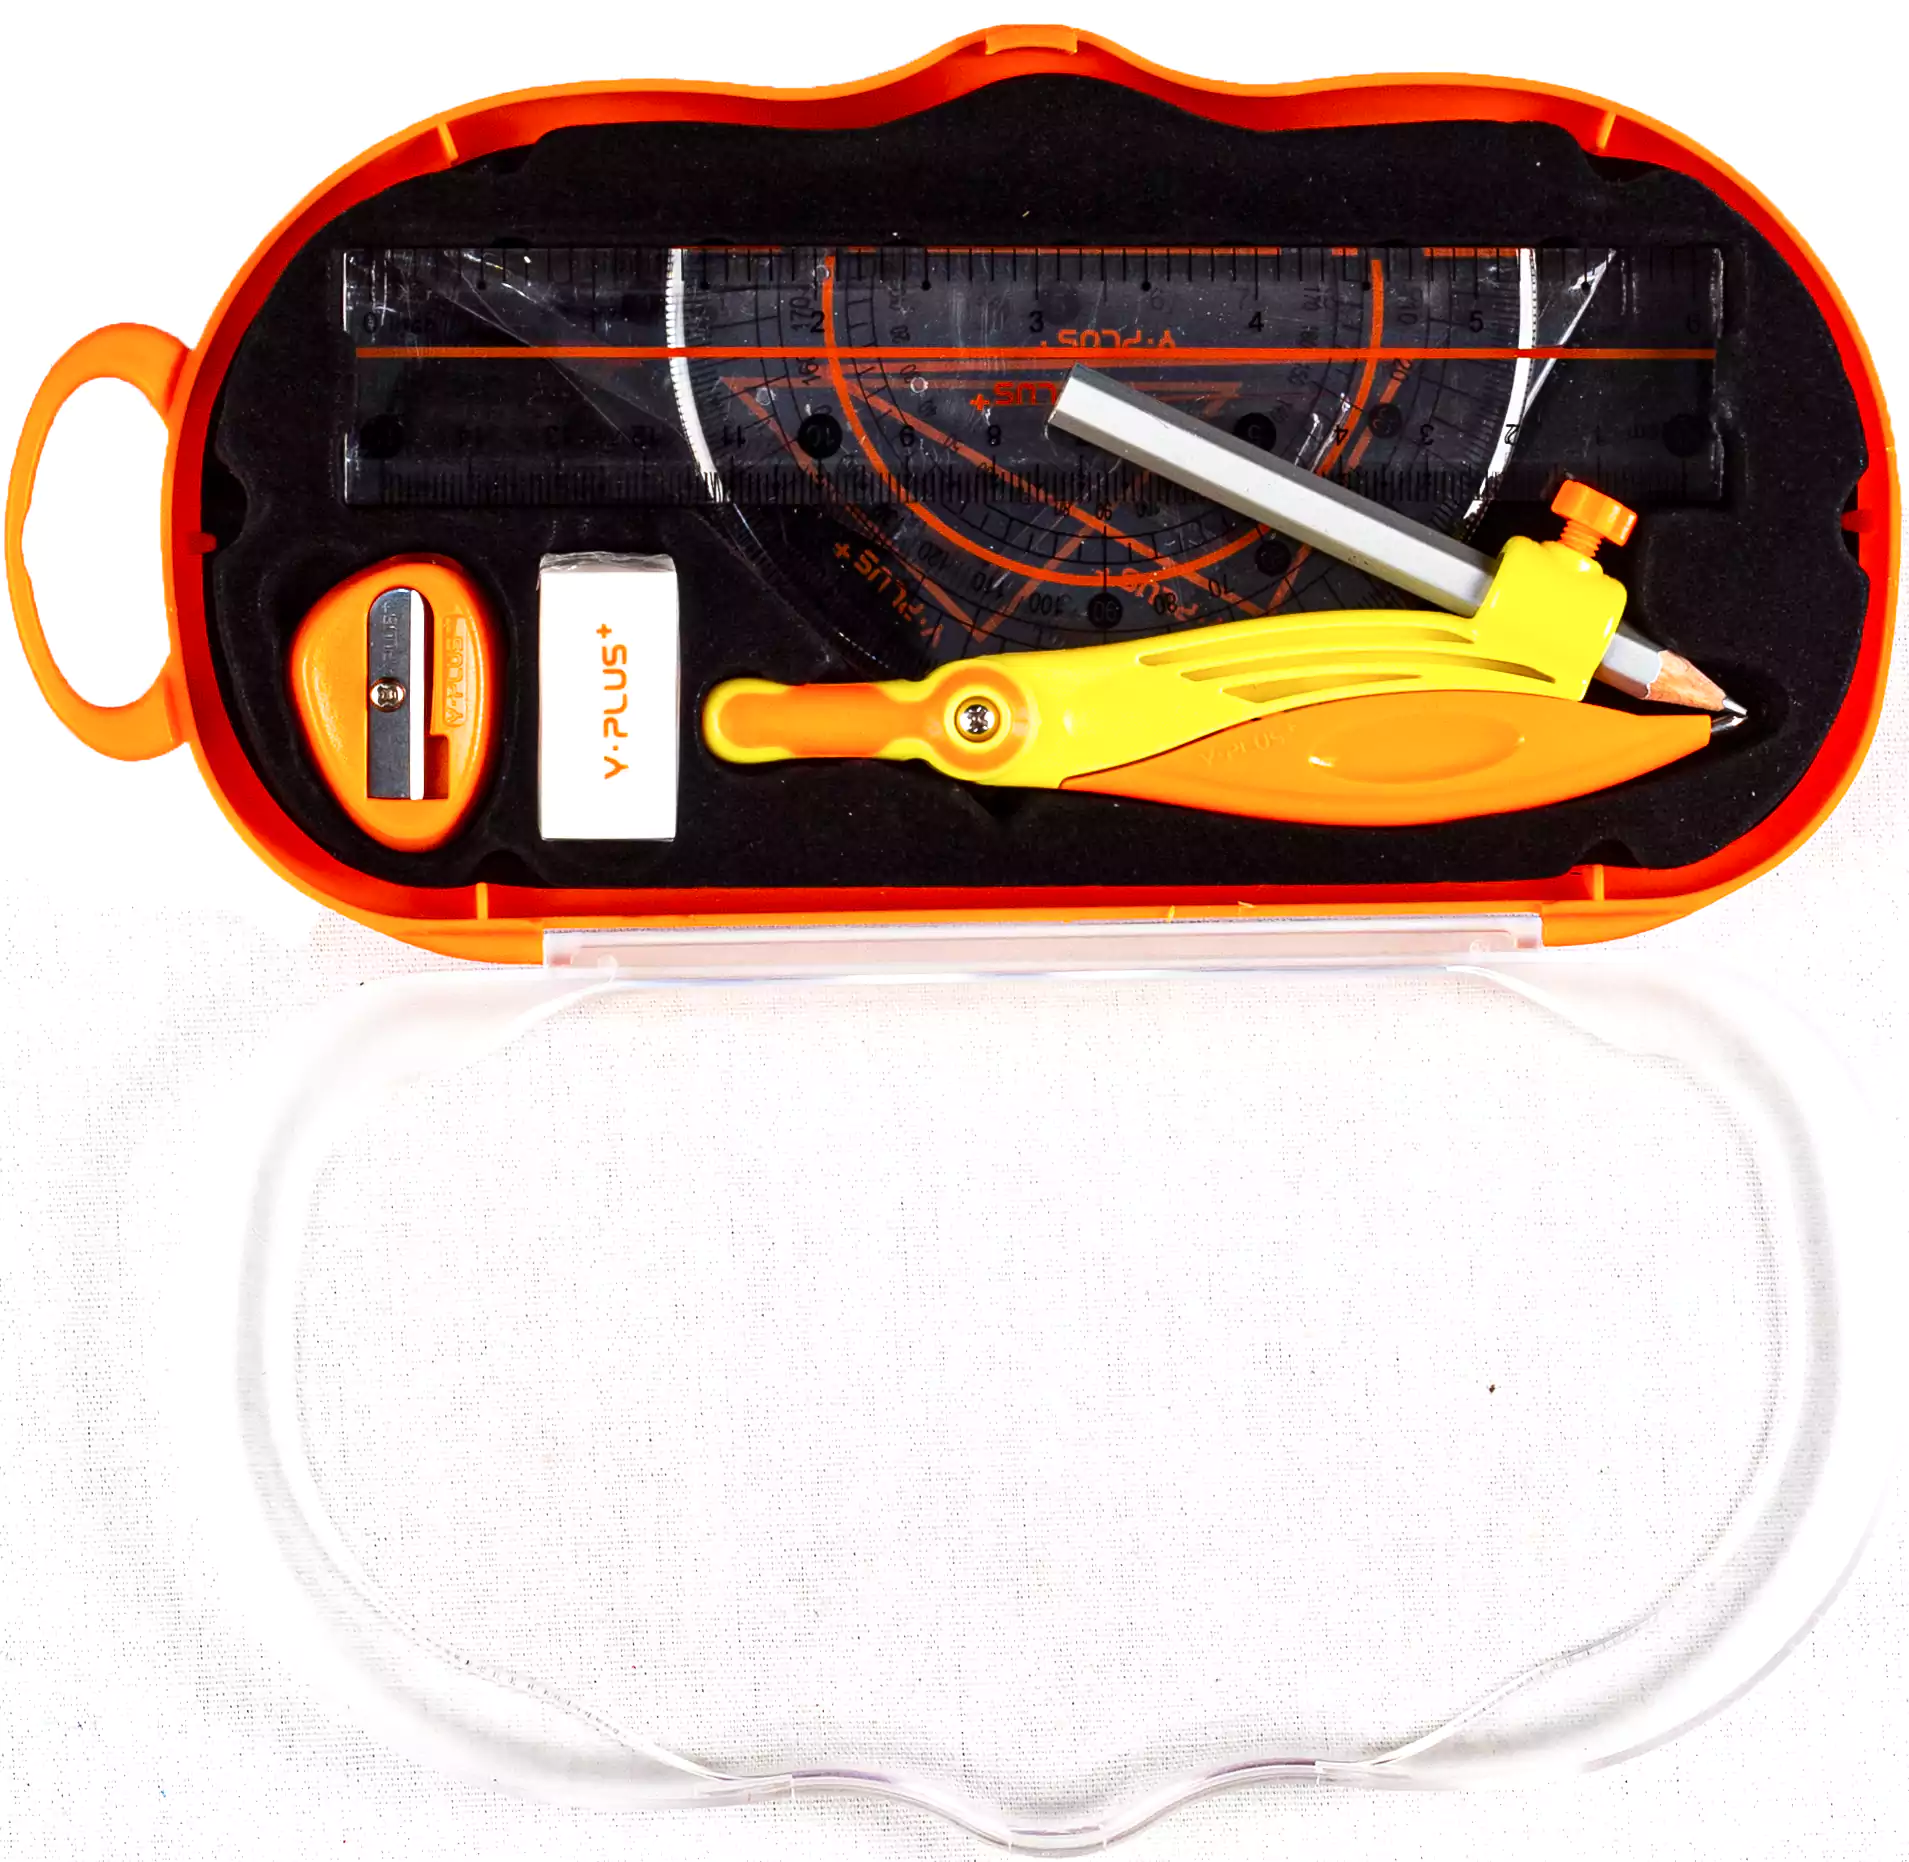 Yplus Plastic Geometry Tool Set, 8 Pieces, Plastic Box, Orange MS190200